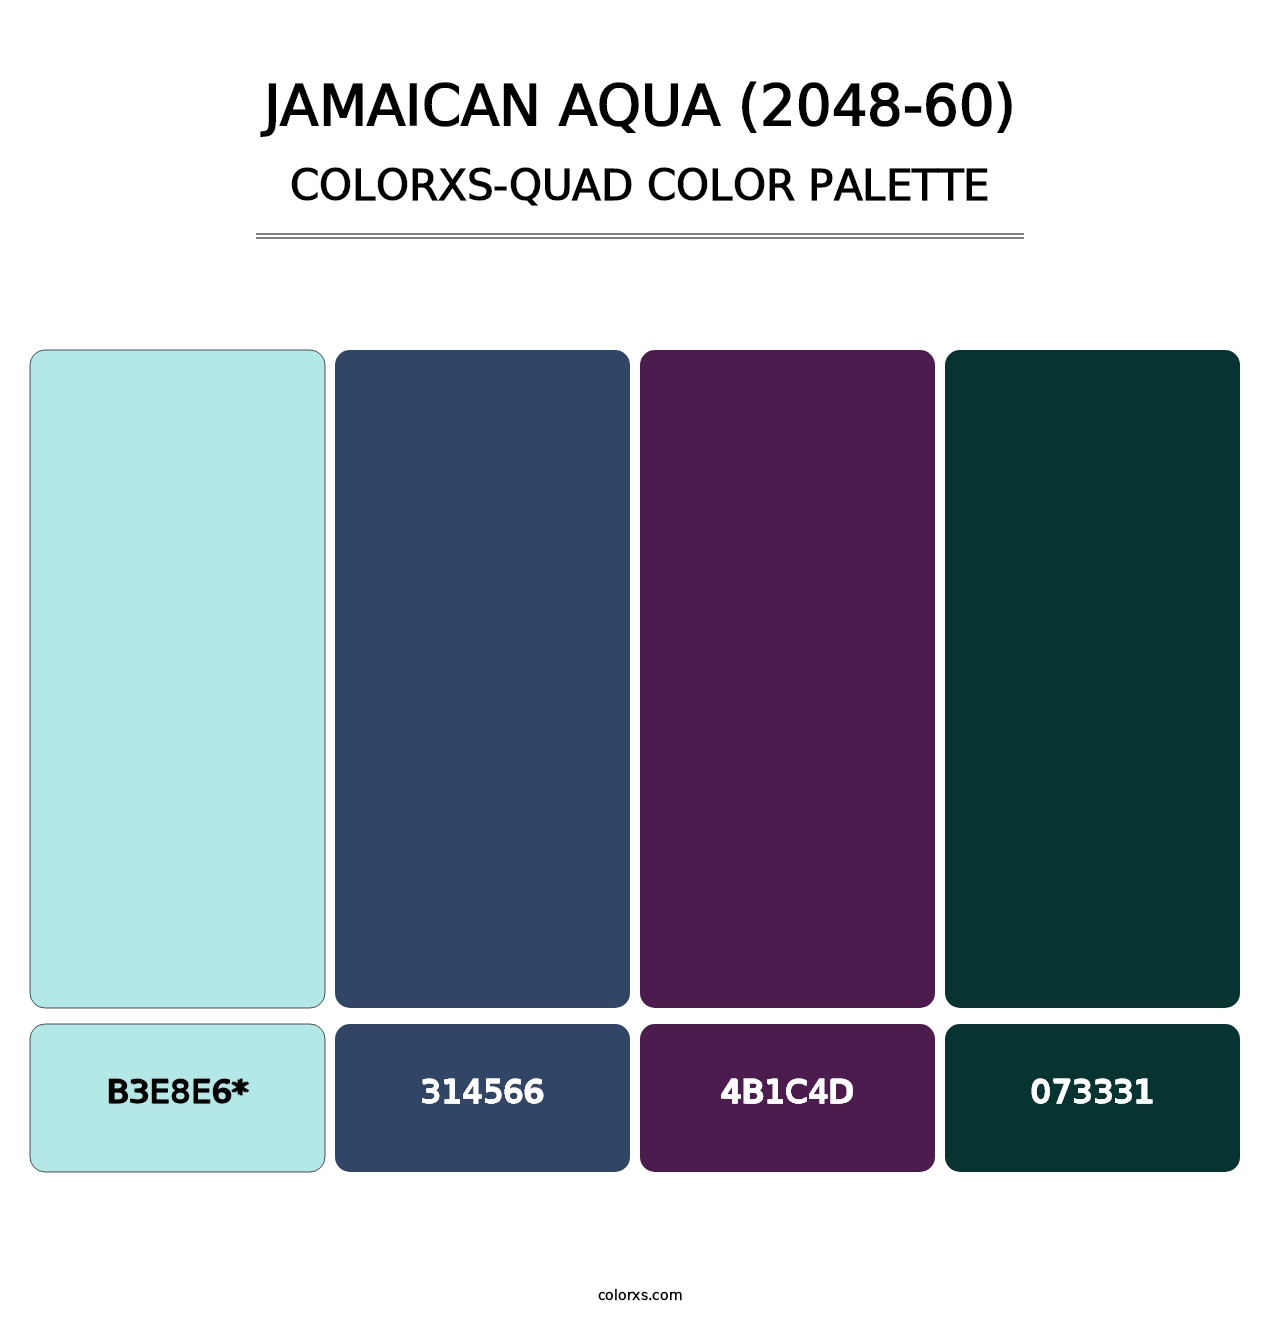 Jamaican Aqua (2048-60) - Colorxs Quad Palette